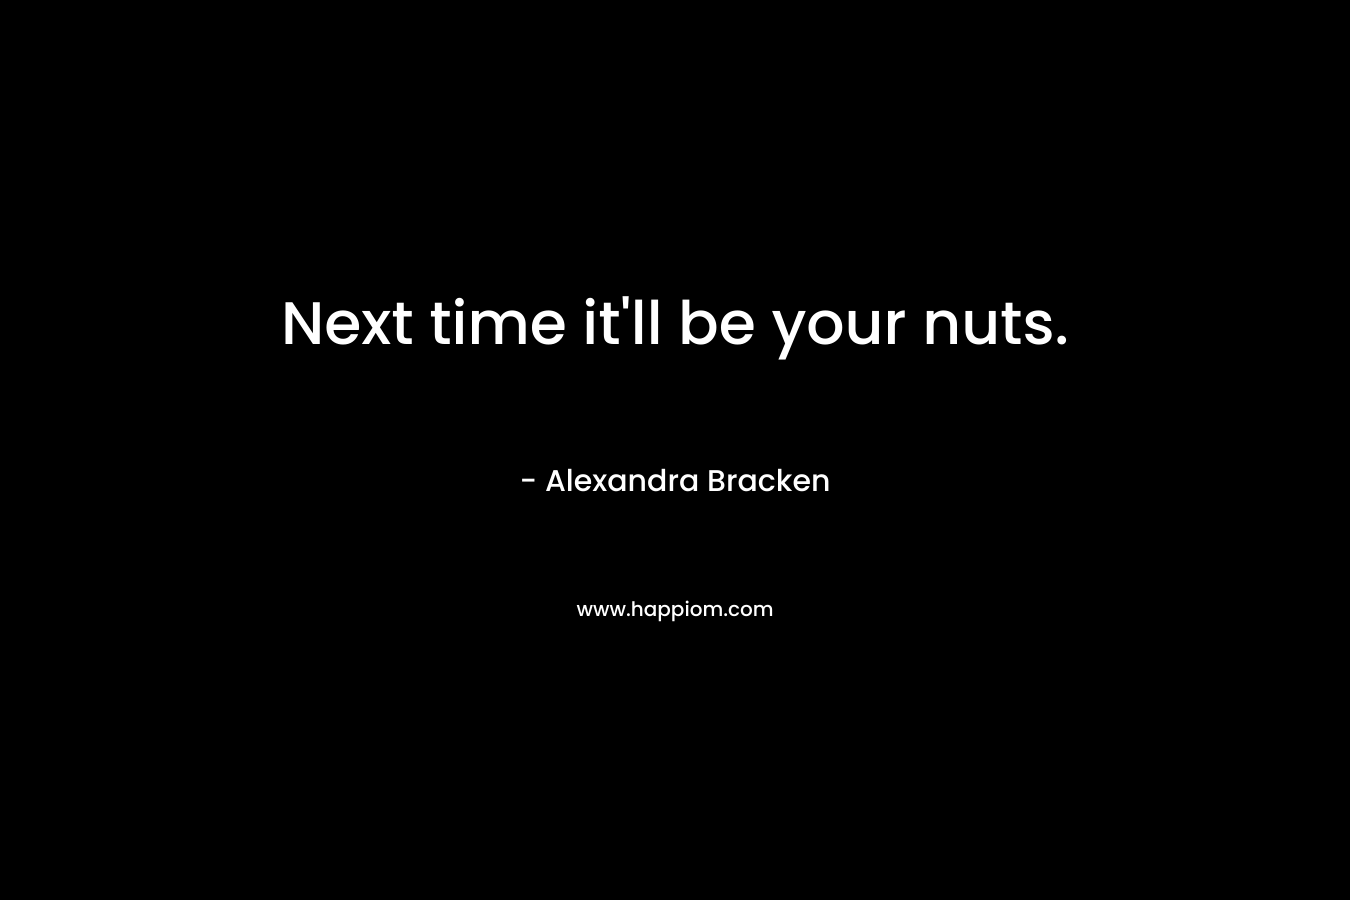 Next time it’ll be your nuts. – Alexandra Bracken